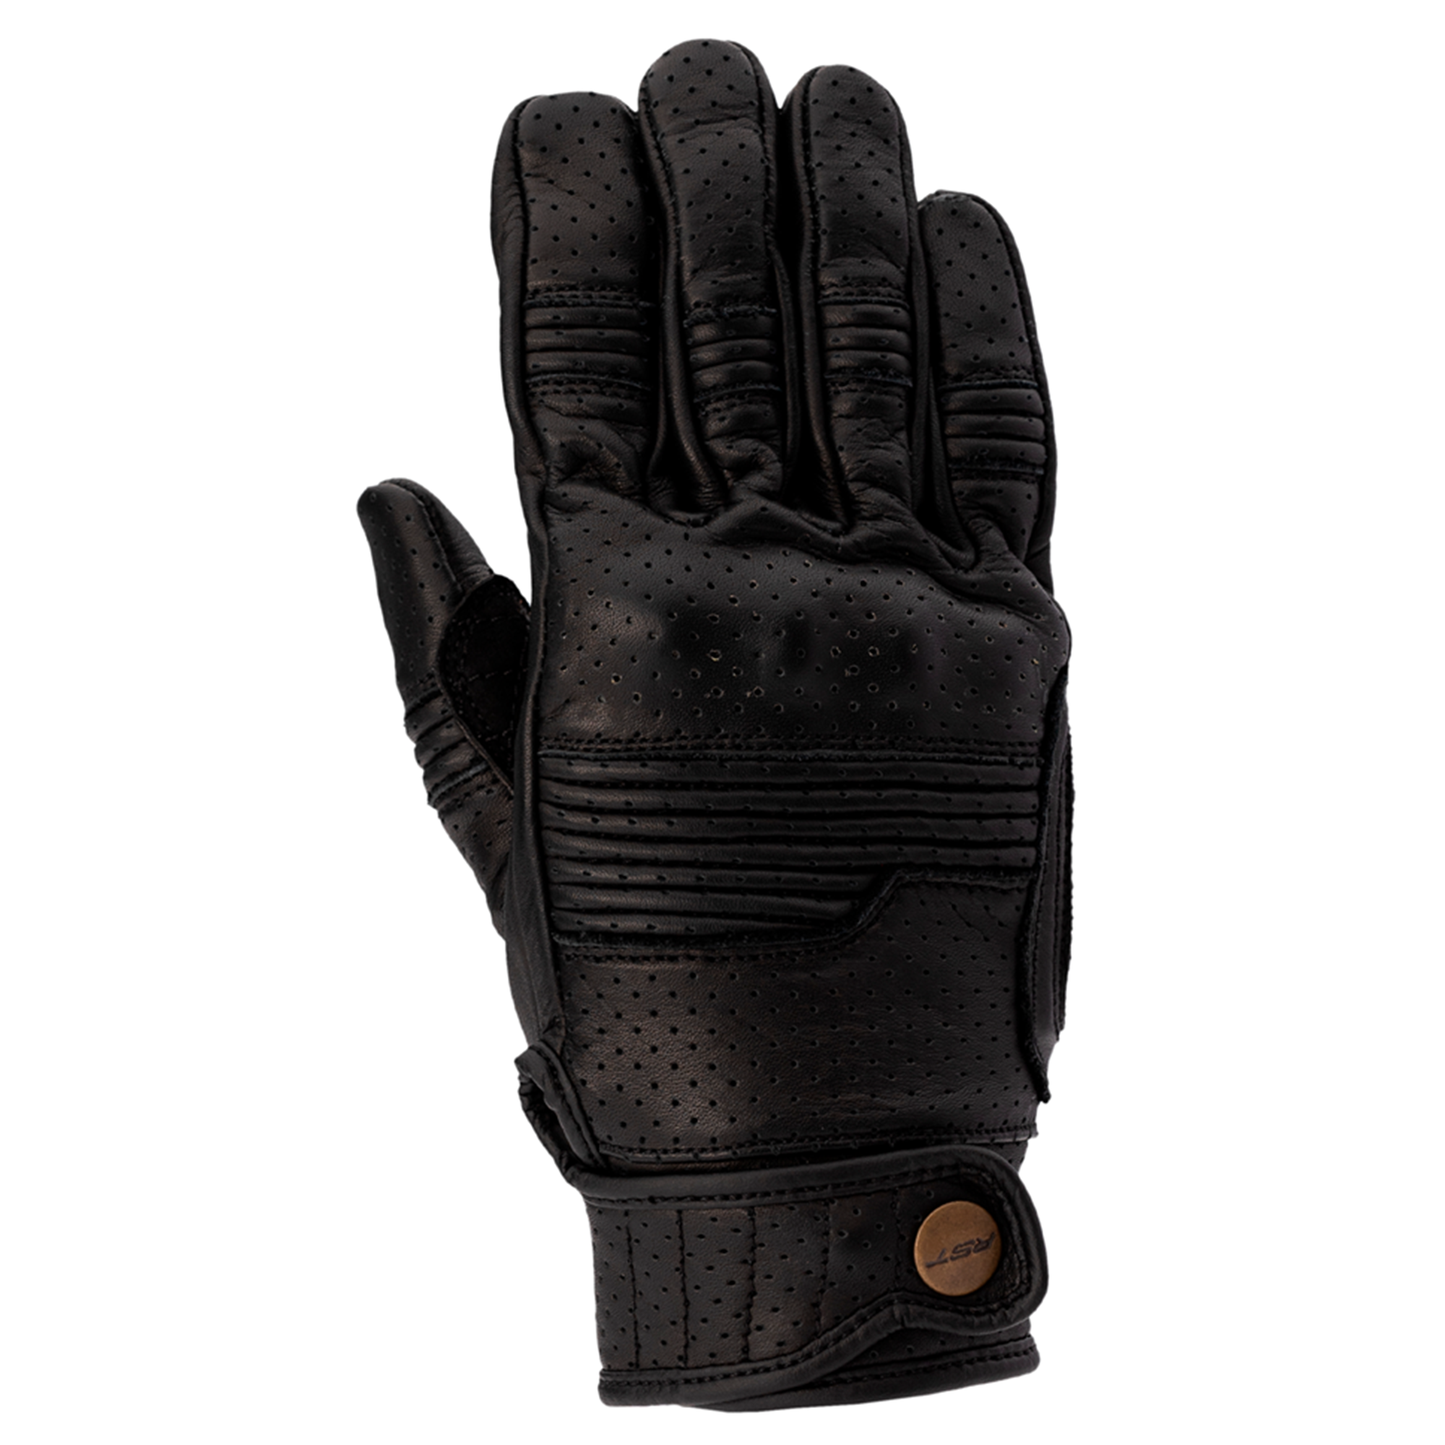 RST Roadster 3 CE Ladies Gloves - Black